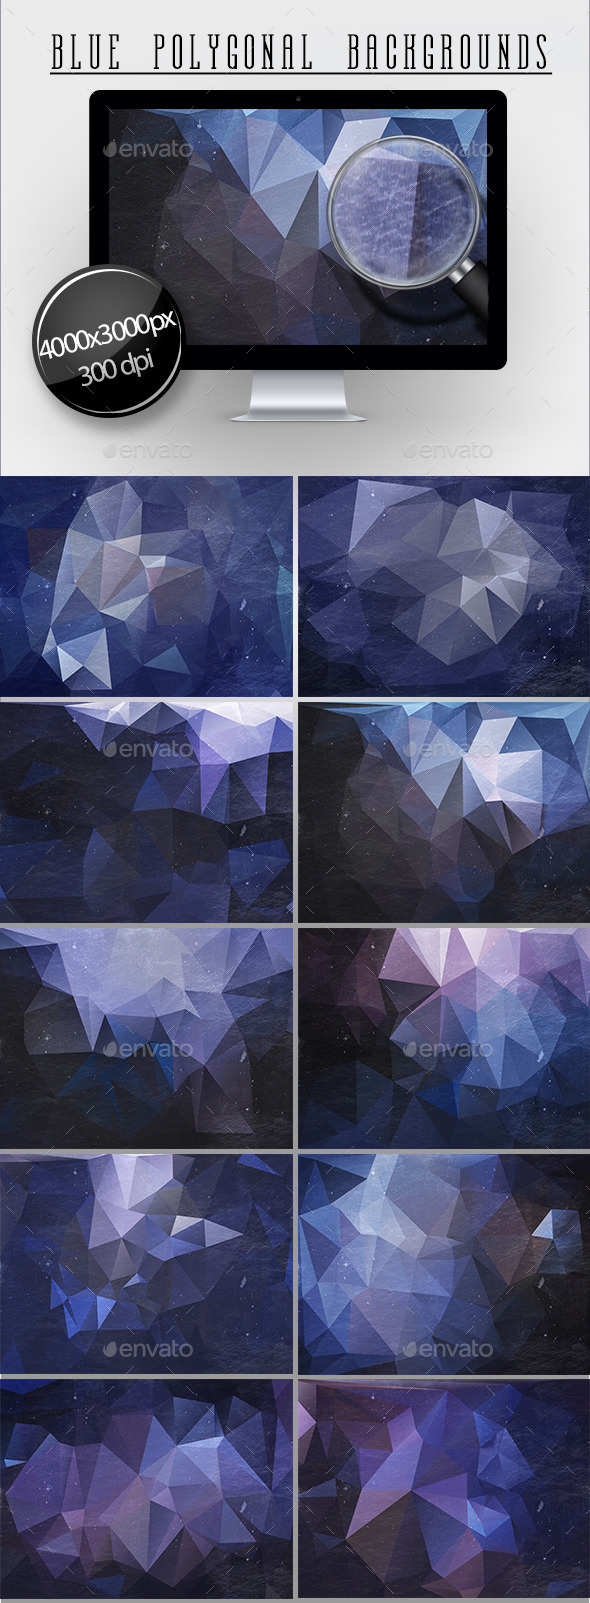 10 Blue Polygonal Backgrounds